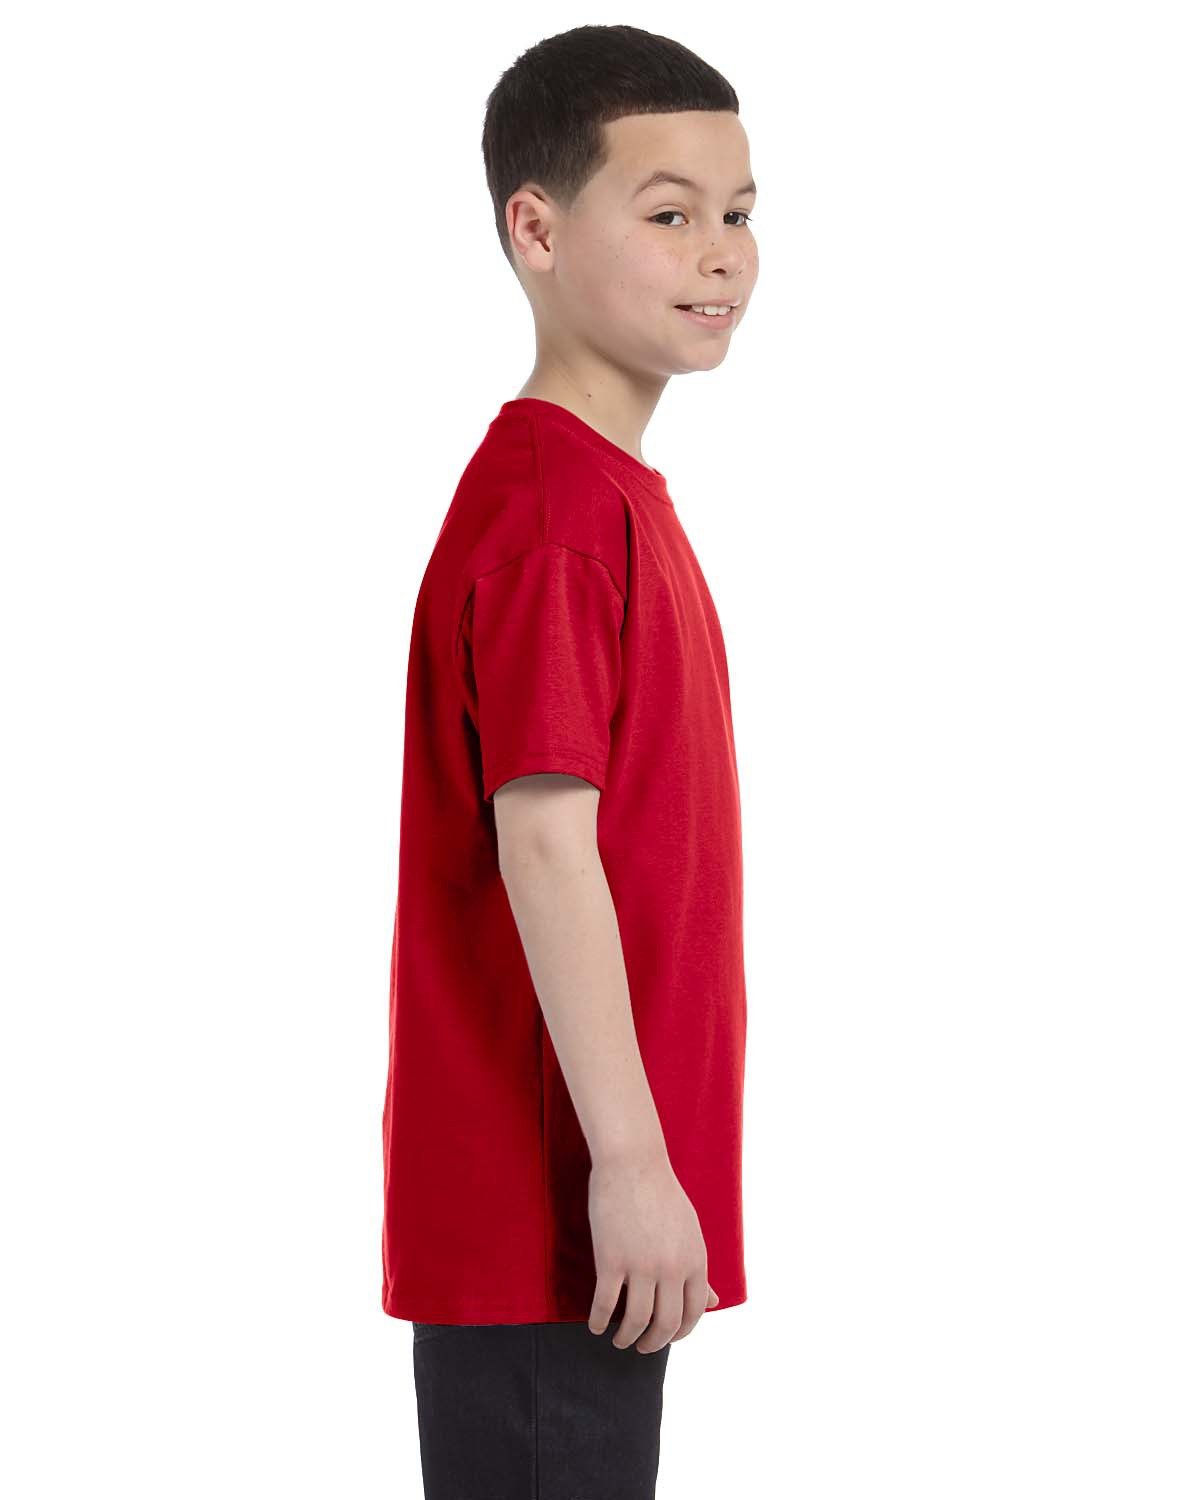 Gildan Youth Regular Cotton T Shirt